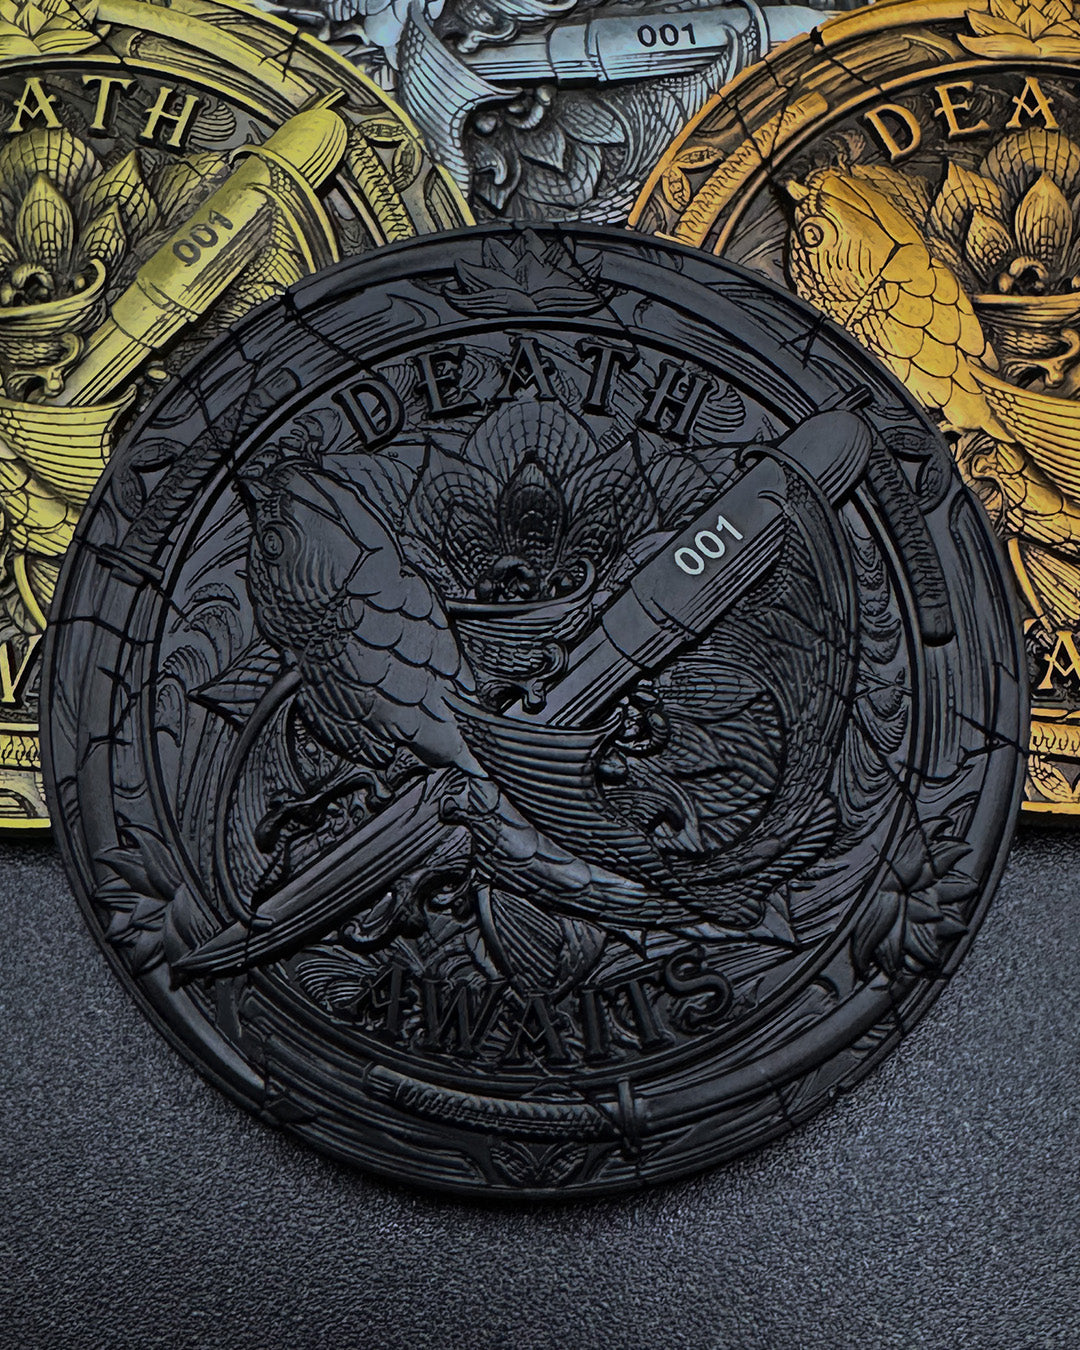 Death awaits VII - The Hard Edition - Limited 30 - Coin